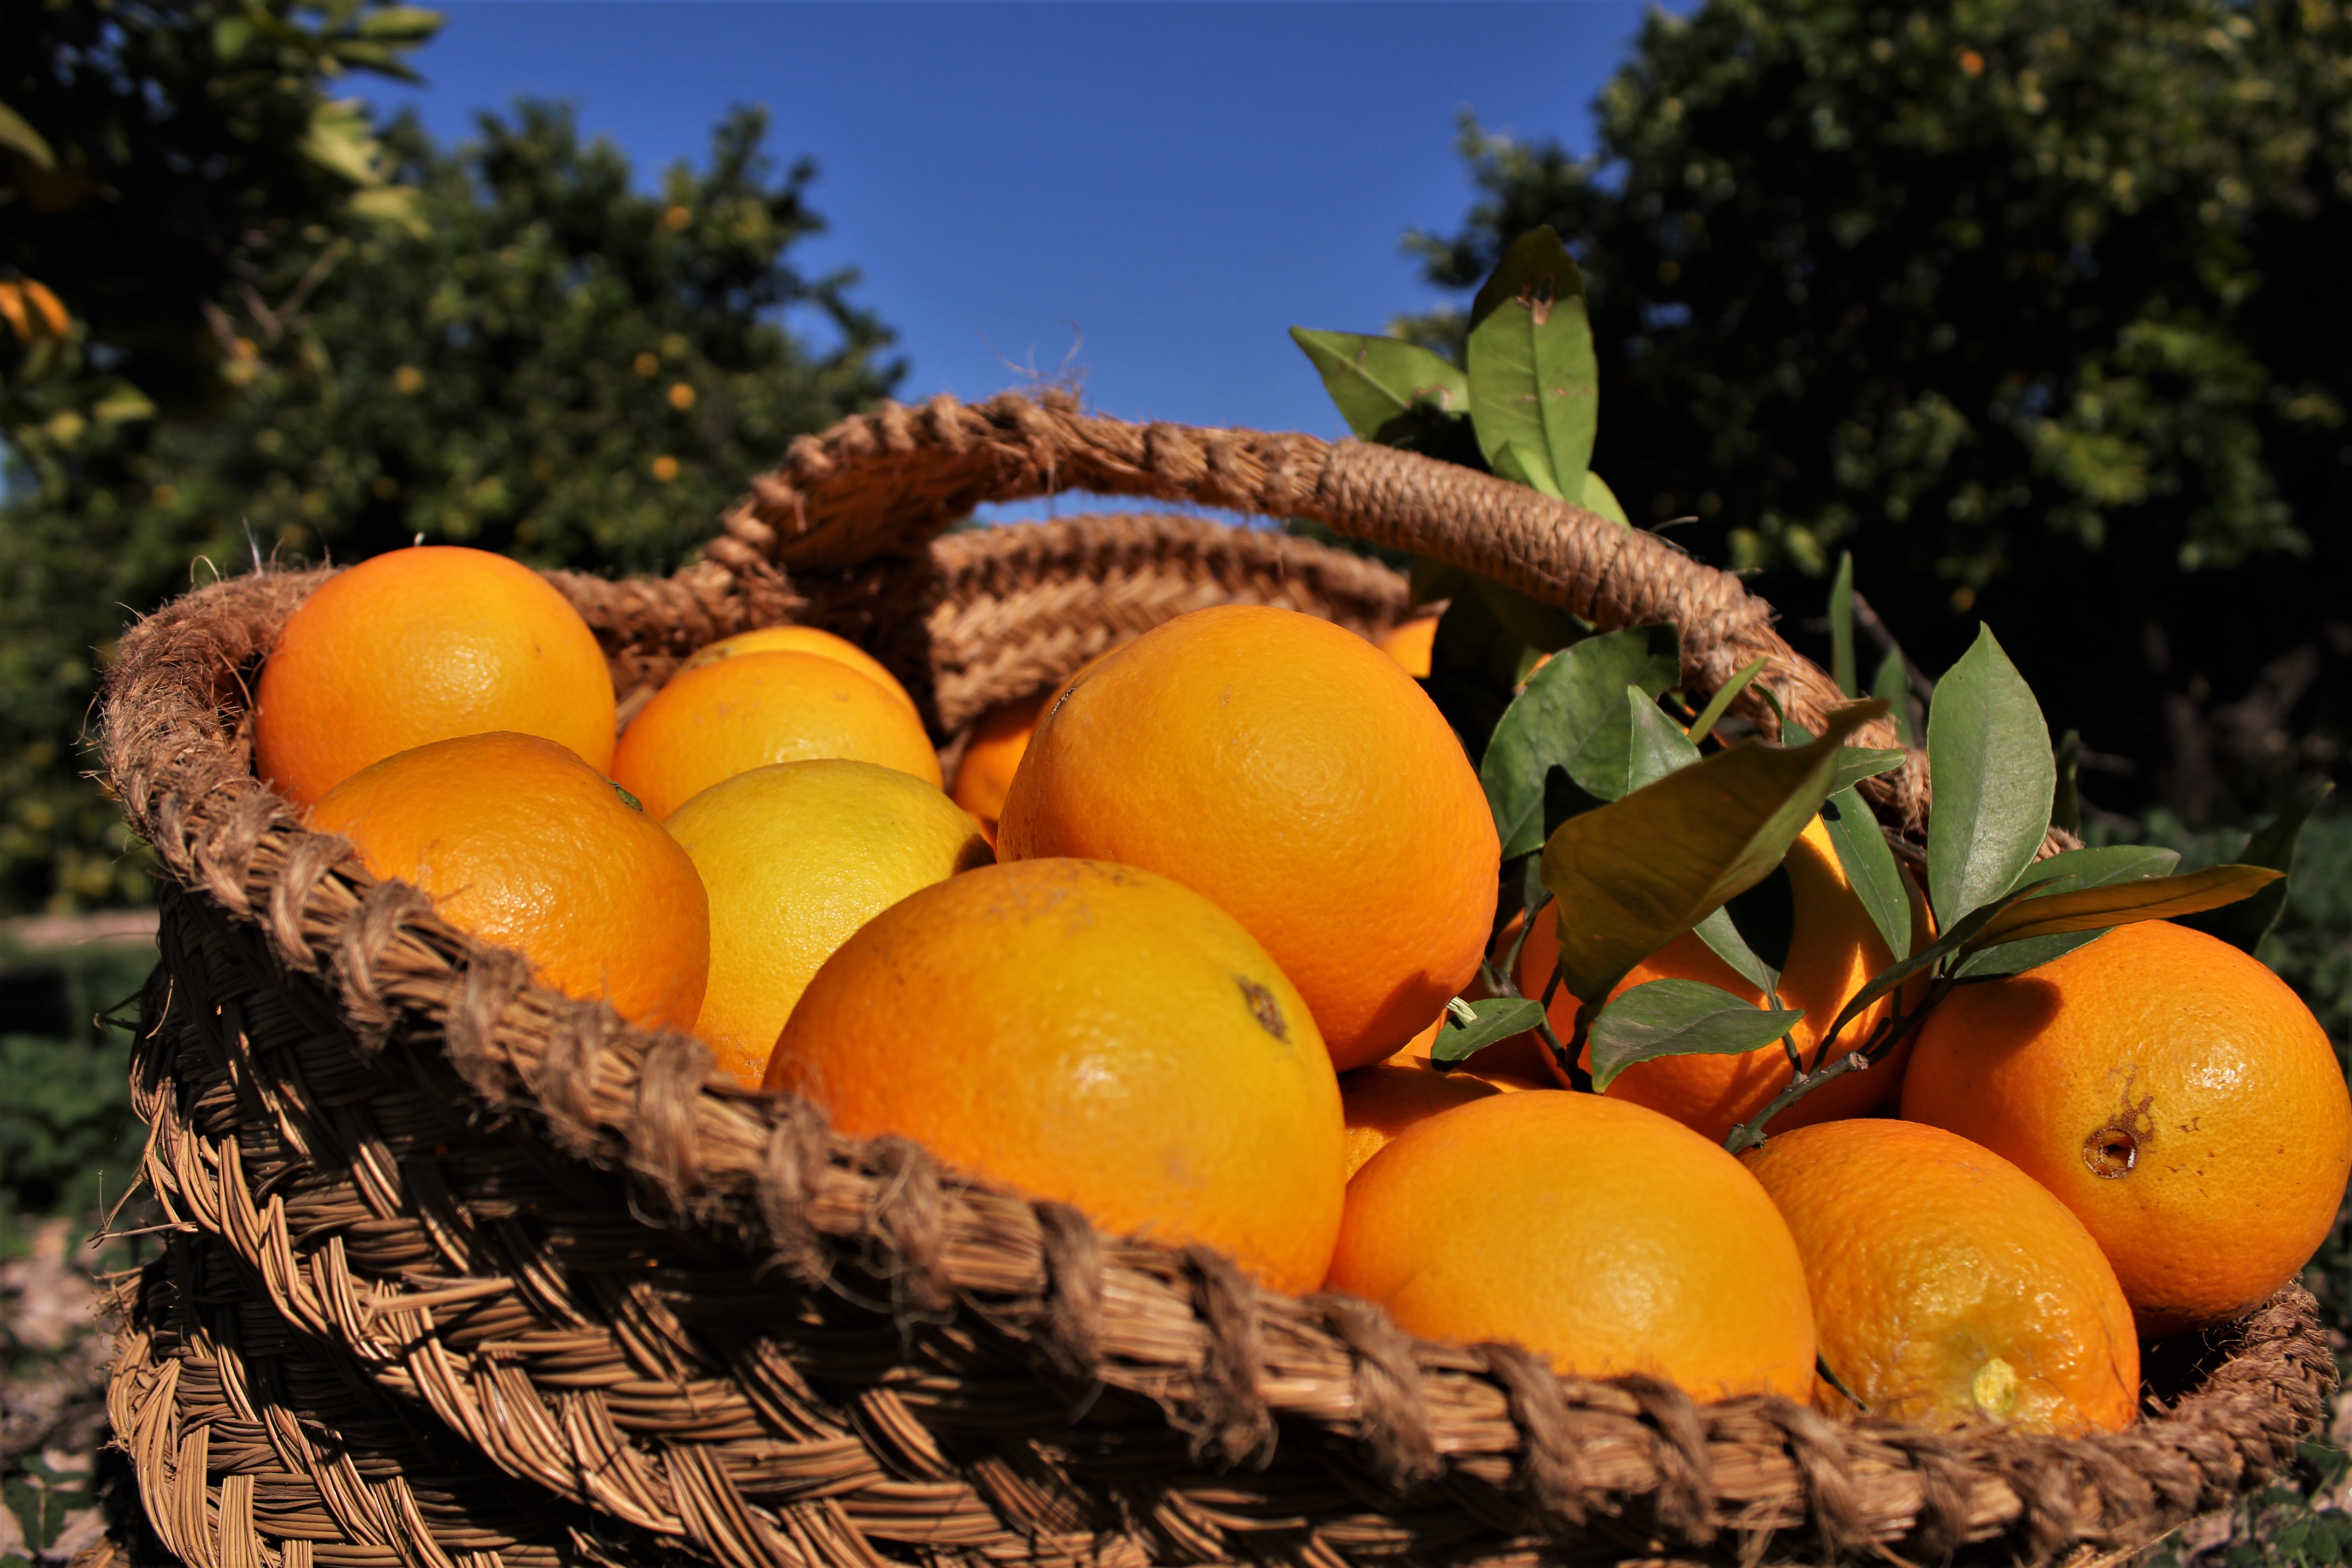 Oranges from València